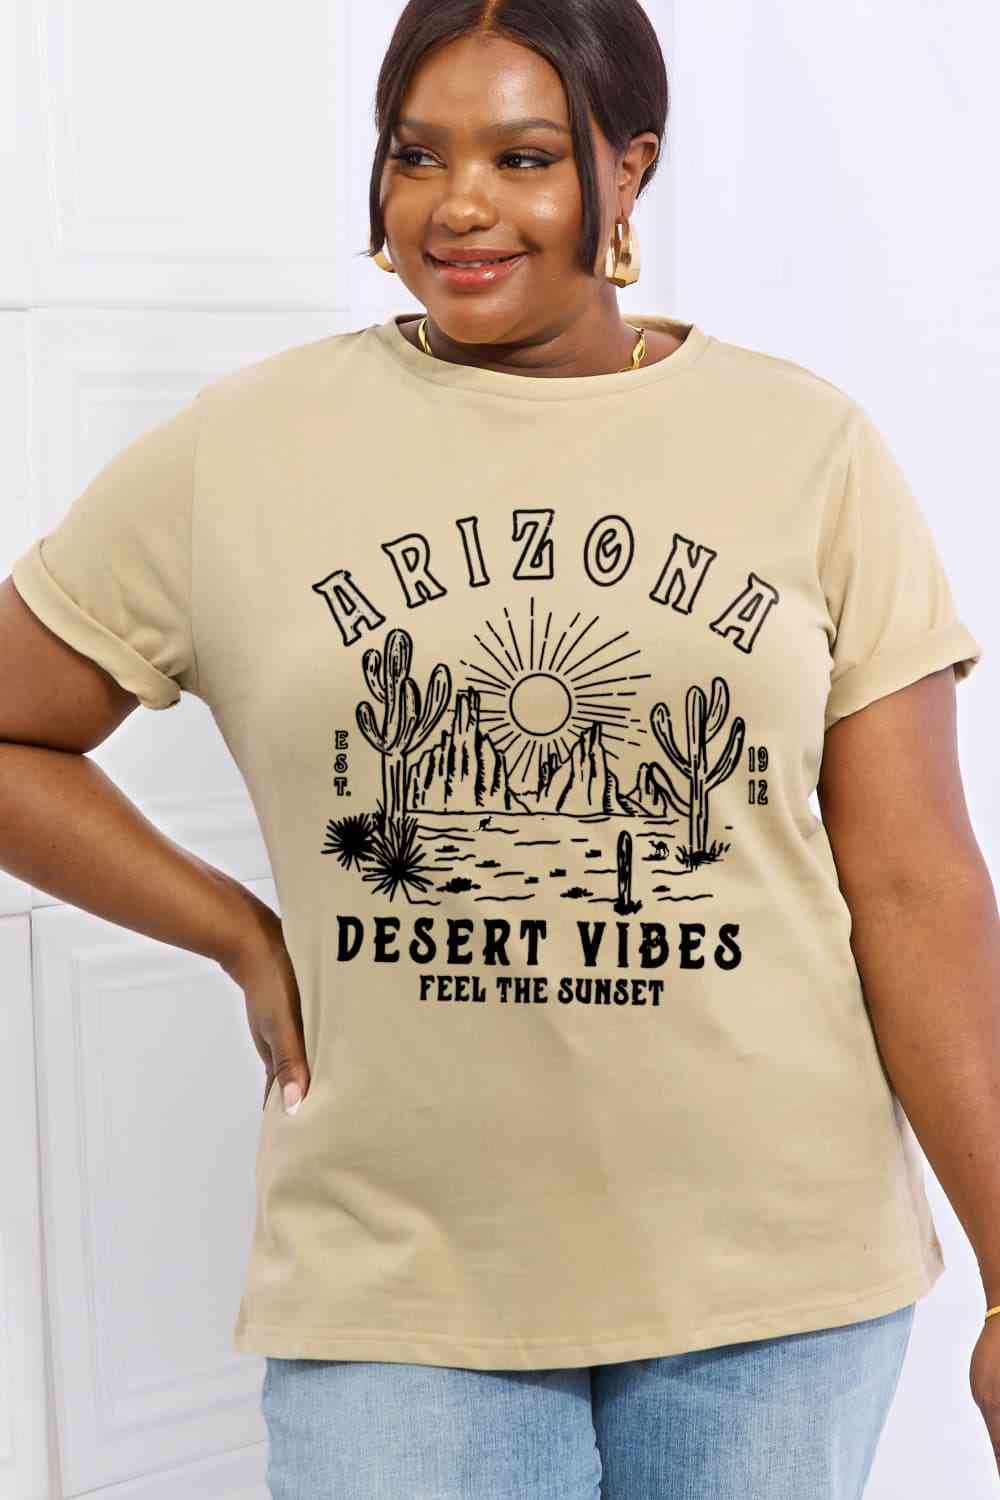 ARIZONA DESERT VIBES FEEL THE SUNSET Graphic Cotton Tee - T-Shirts - Shirts & Tops - 3 - 2024